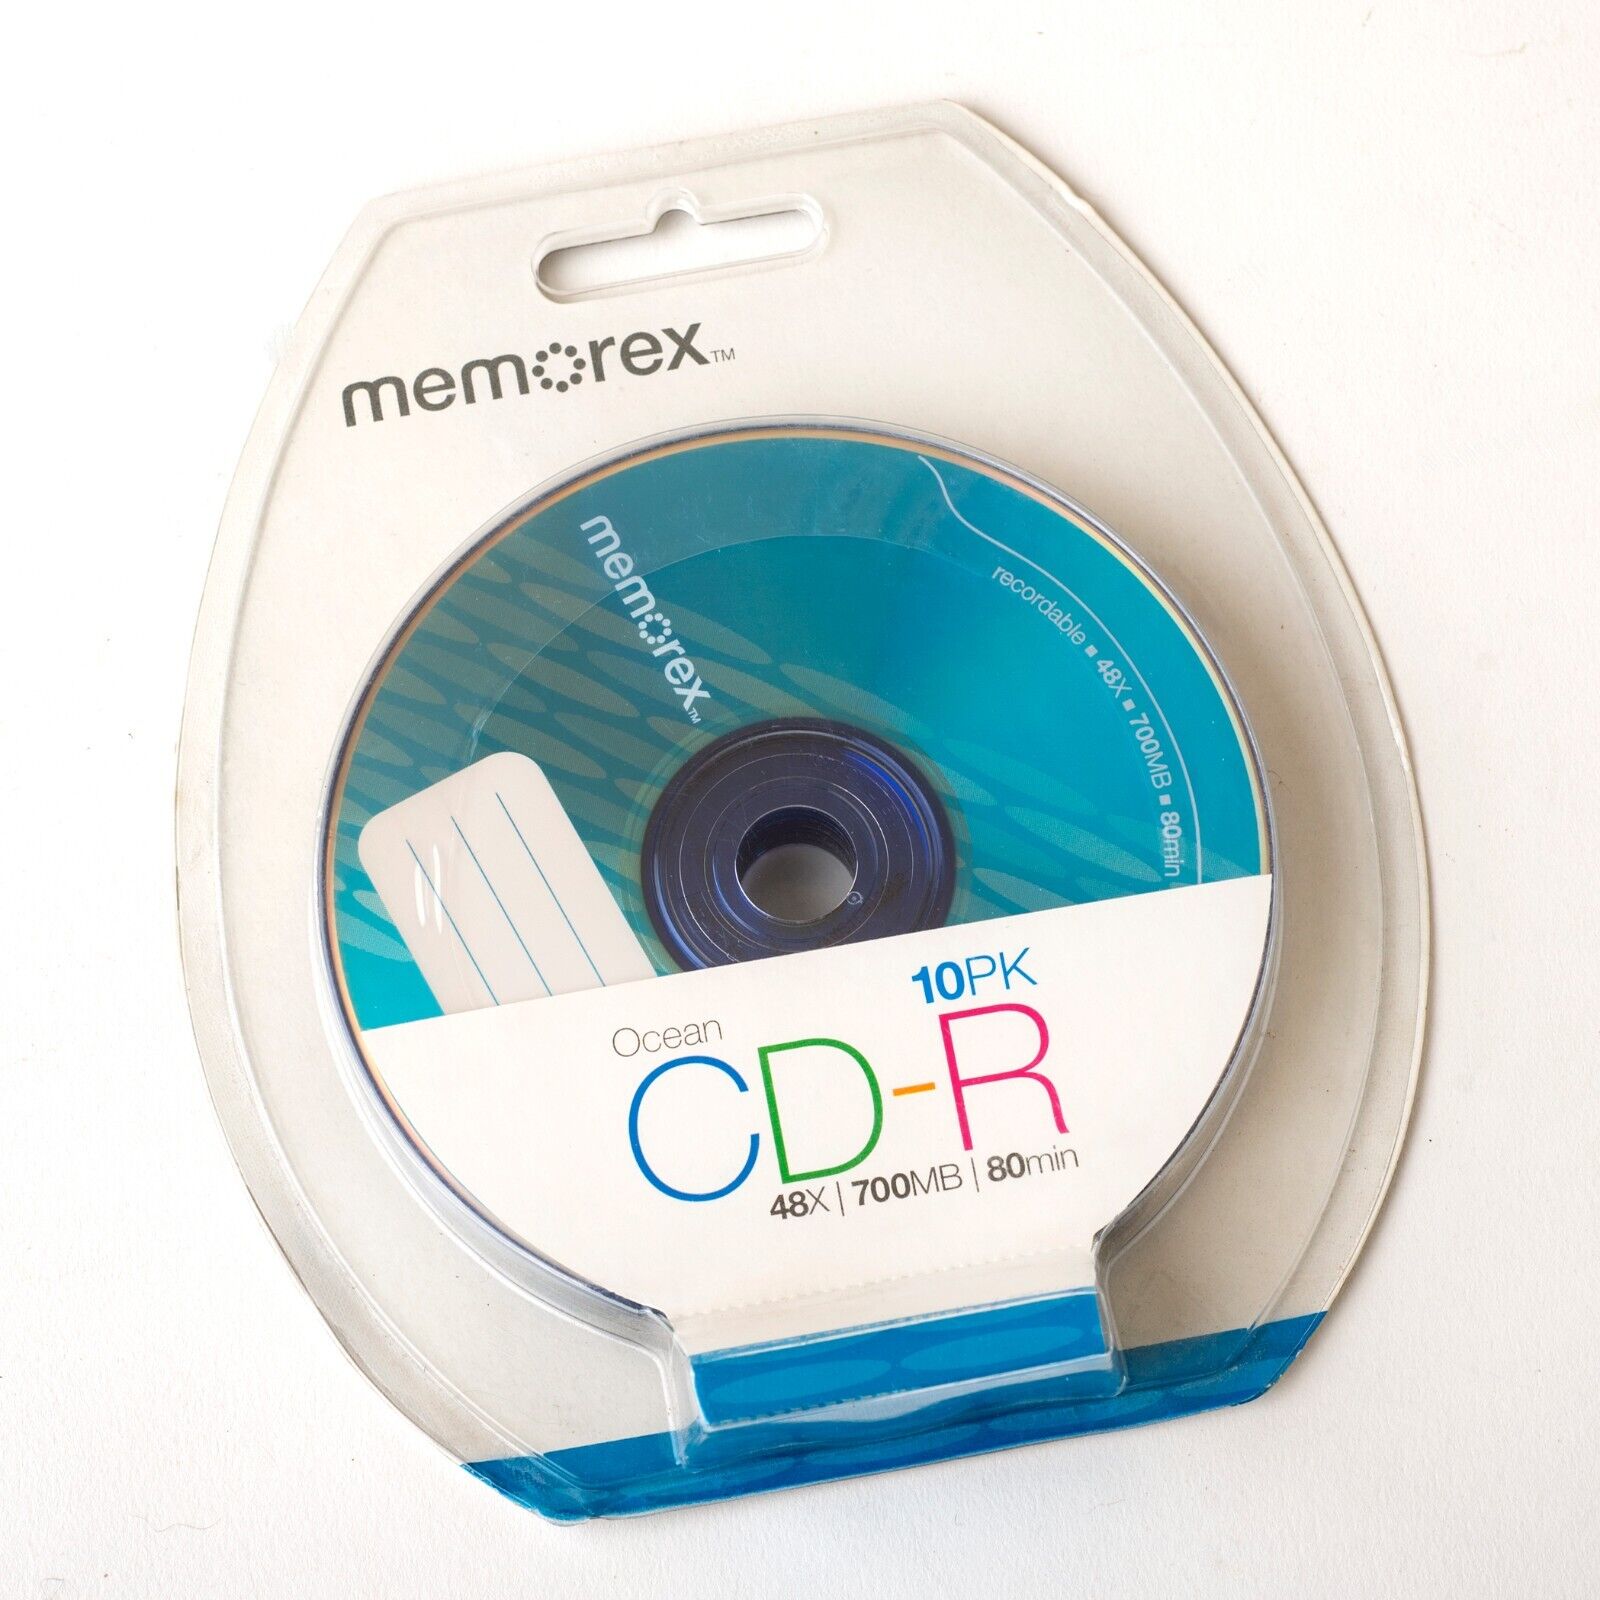 Memorex Ocean CD-R 10 Pack 48 X 700 80 Min NEW Sealed